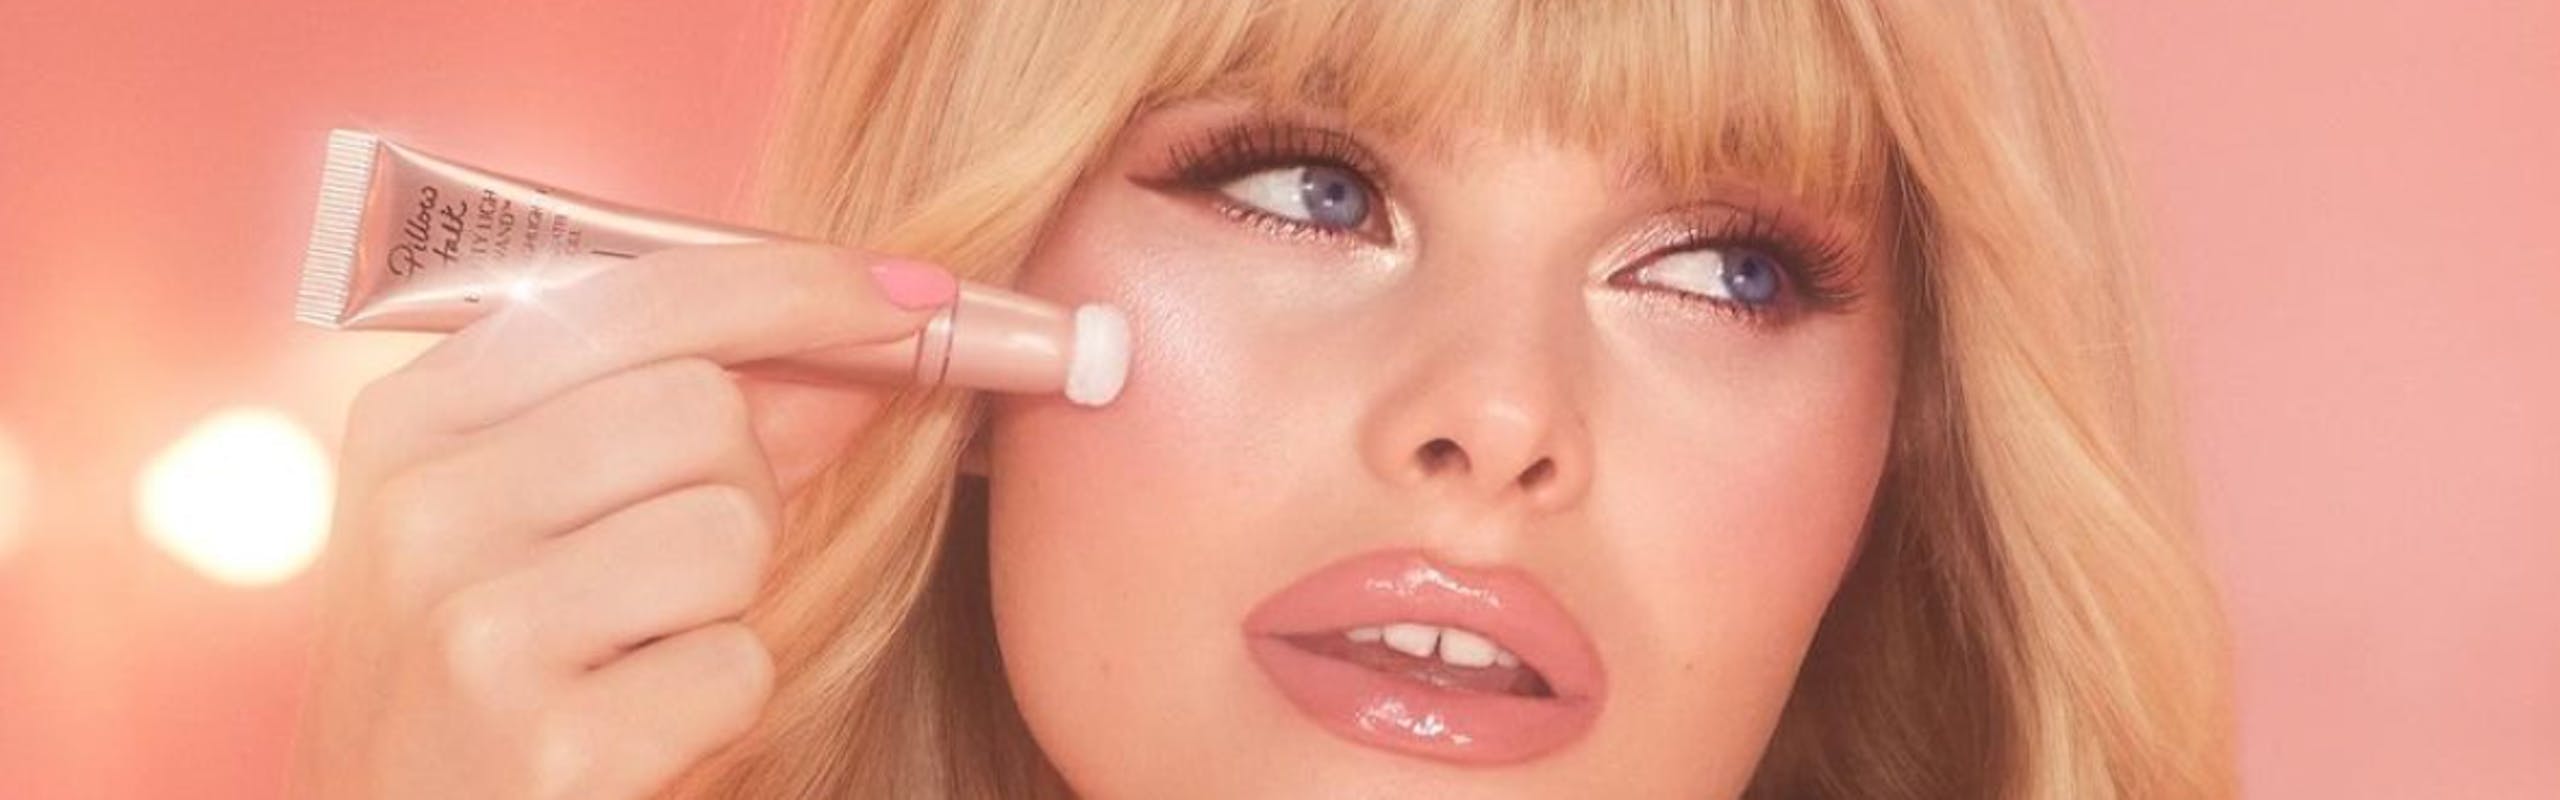 charlotte tilbury makeup liquid highlighters